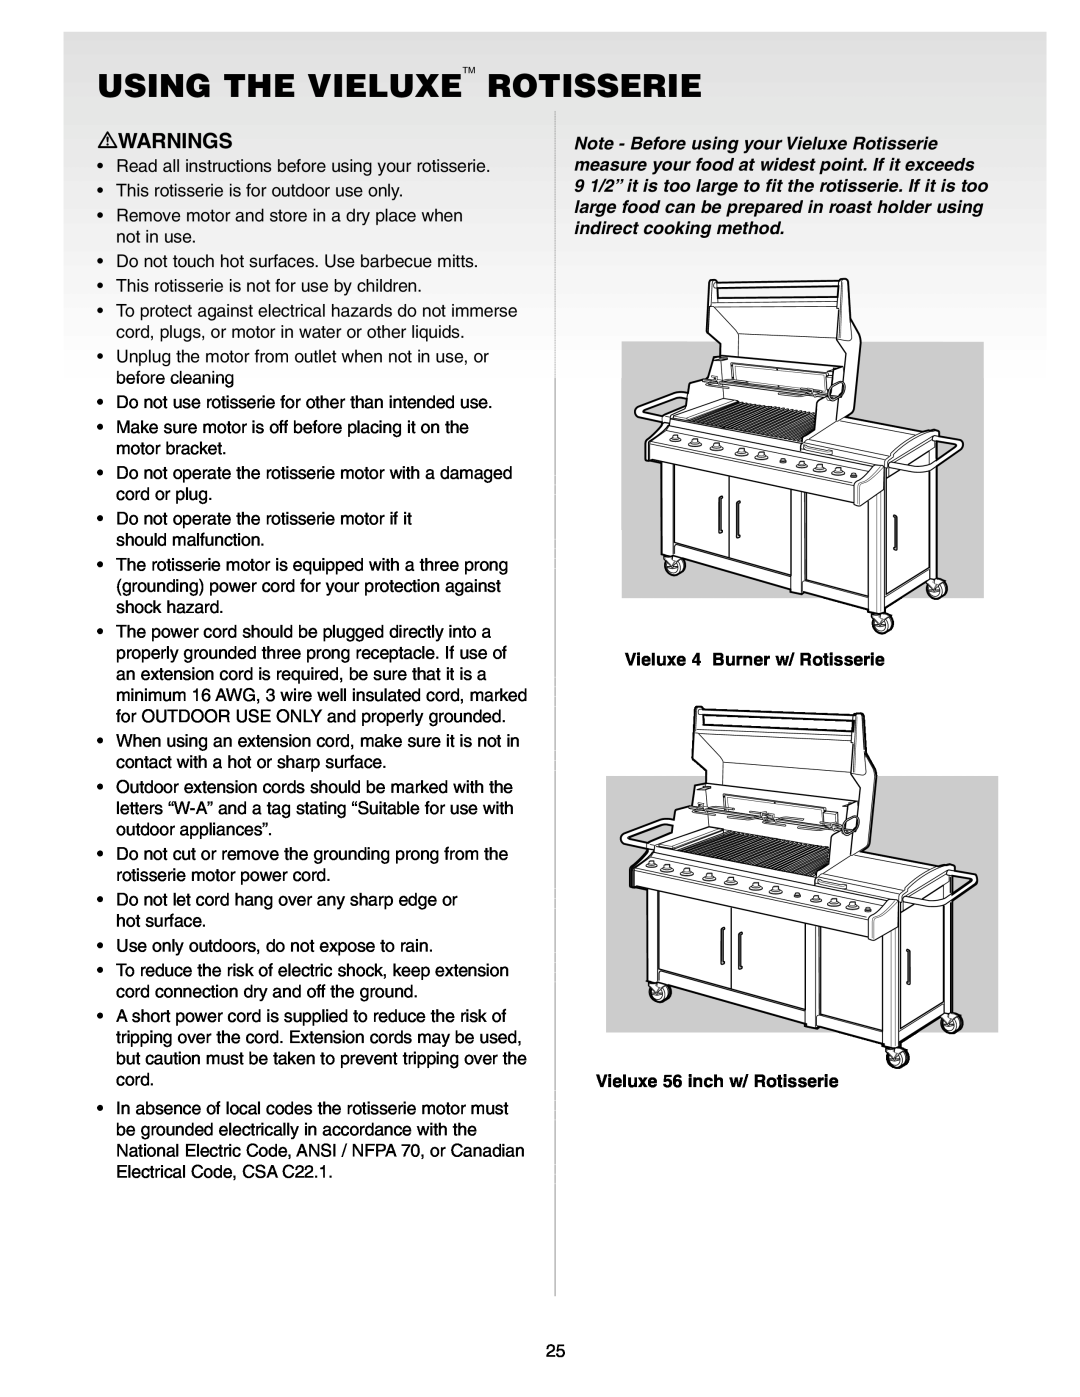 Weber Gas Burner manual Using The Vieluxe Rotisserie, Warnings 